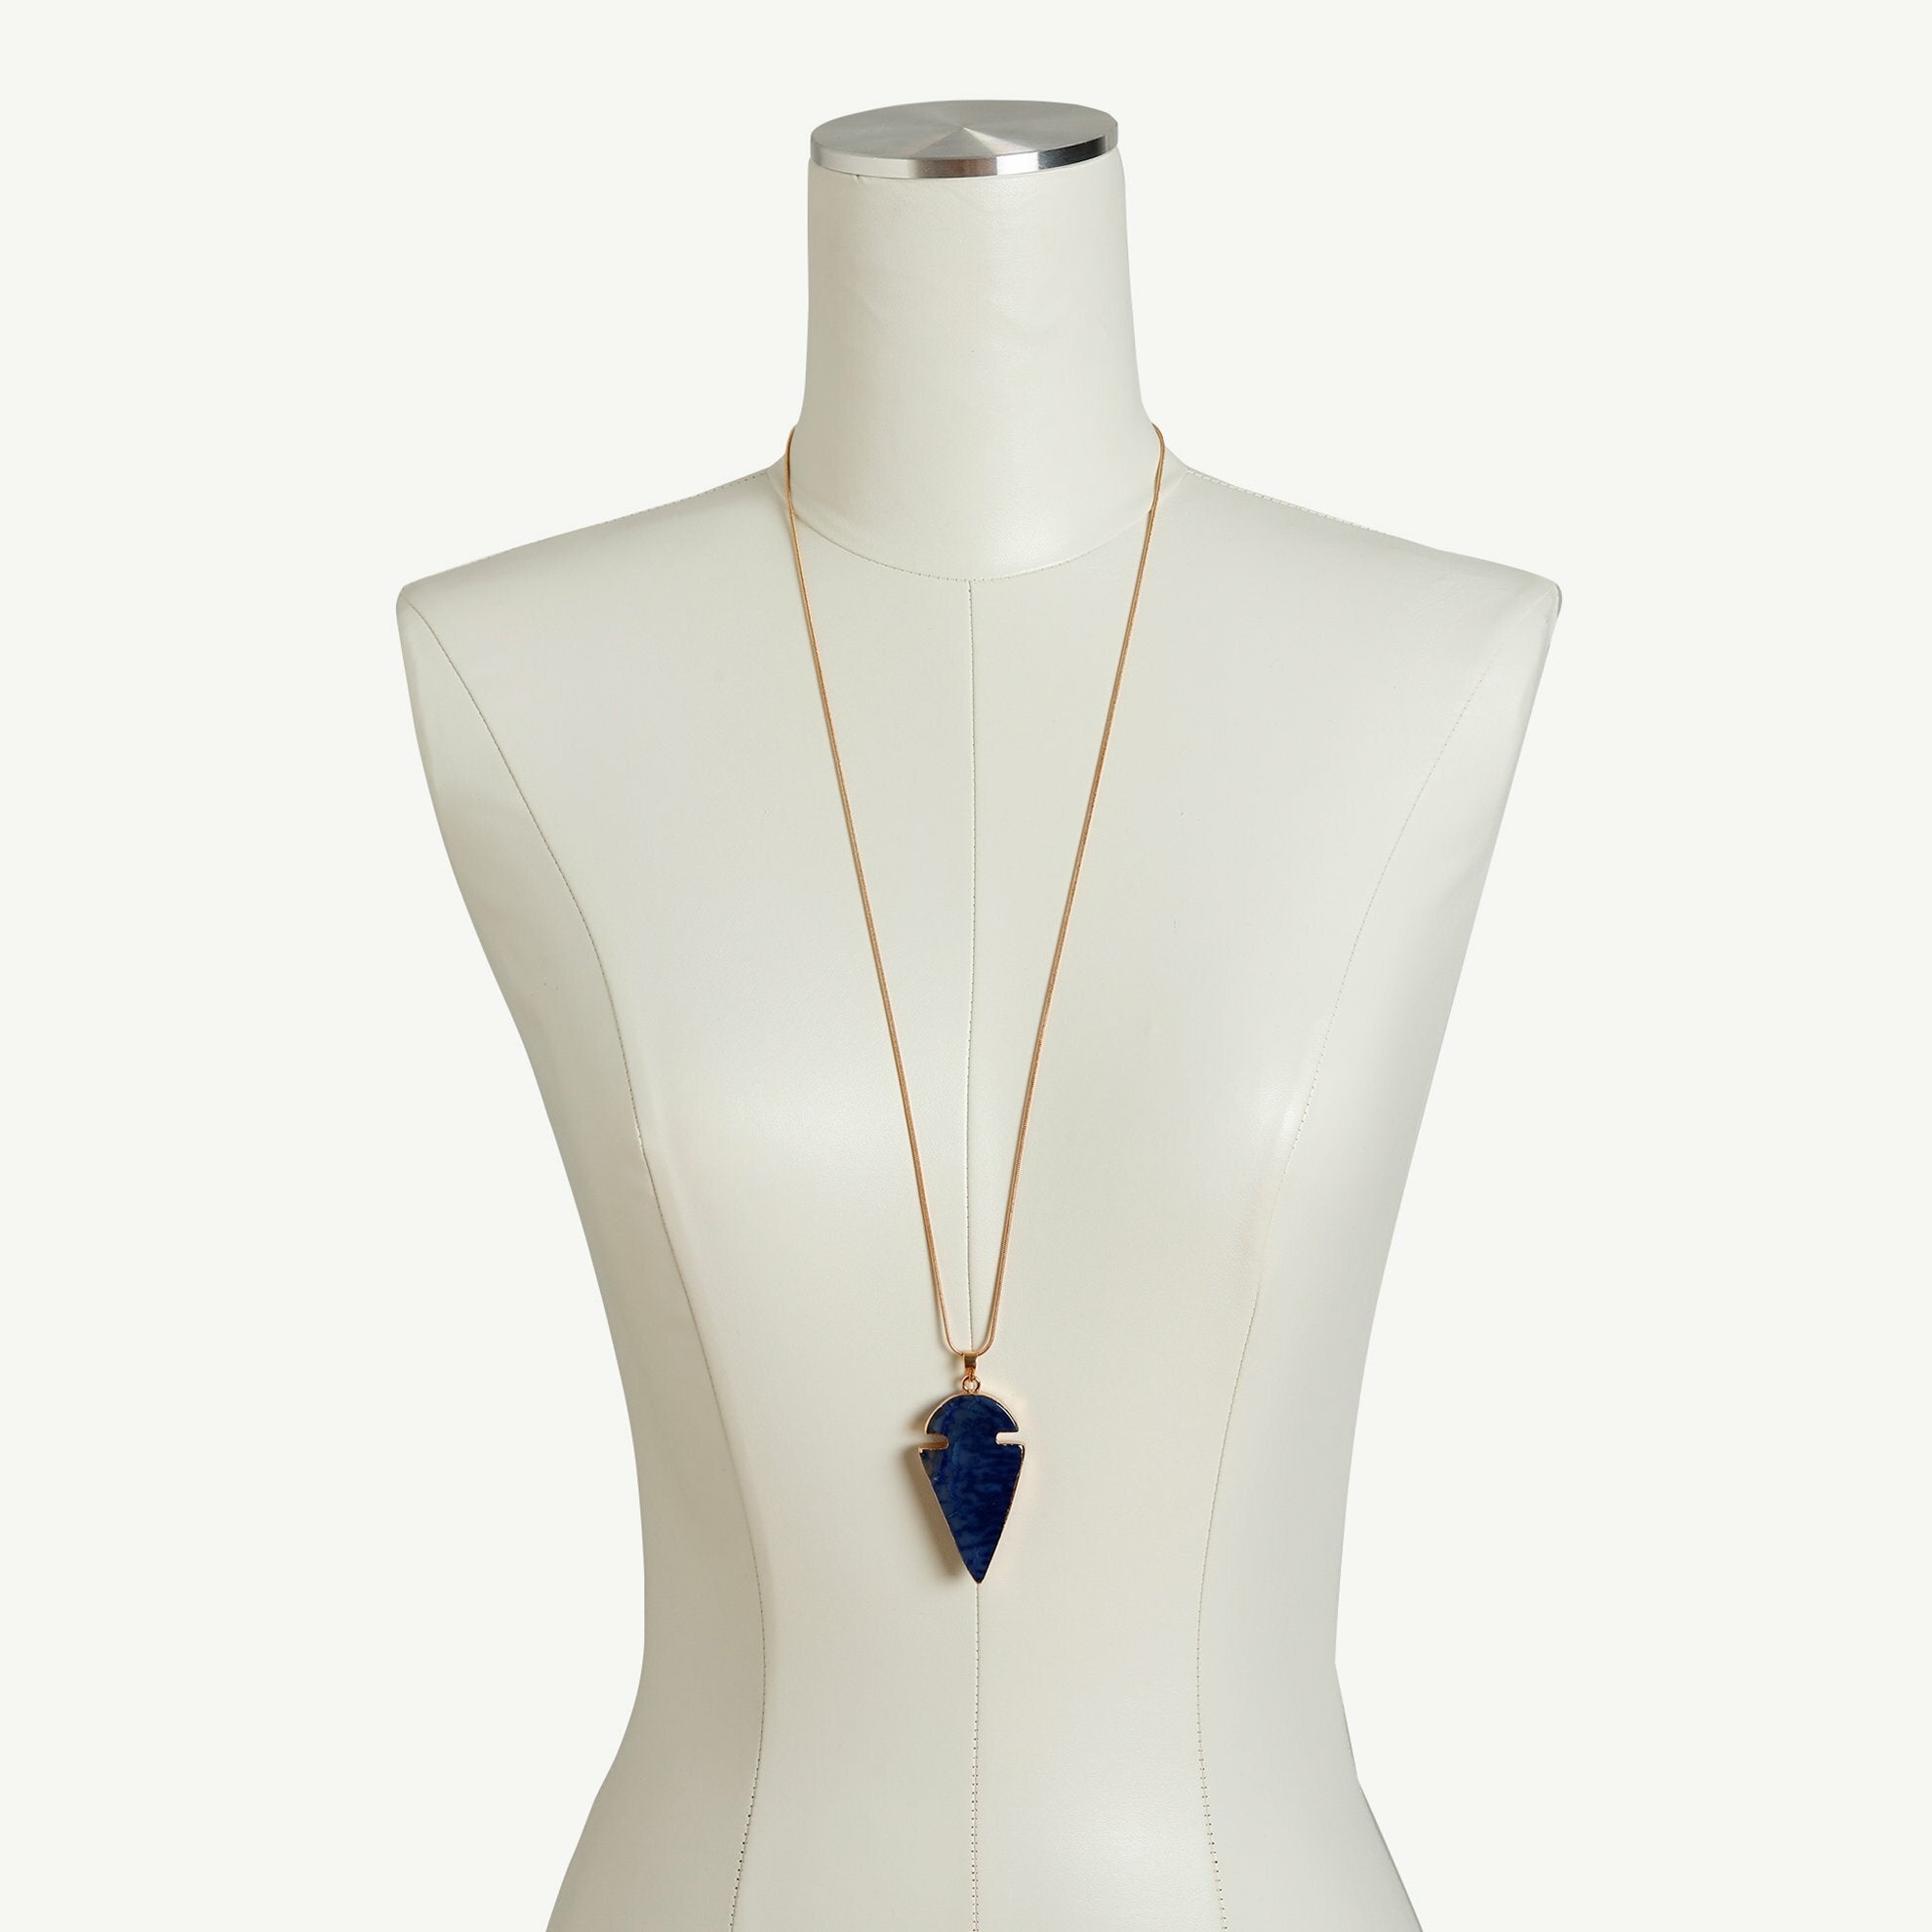 Arrow shaped blue necklace on dress form.